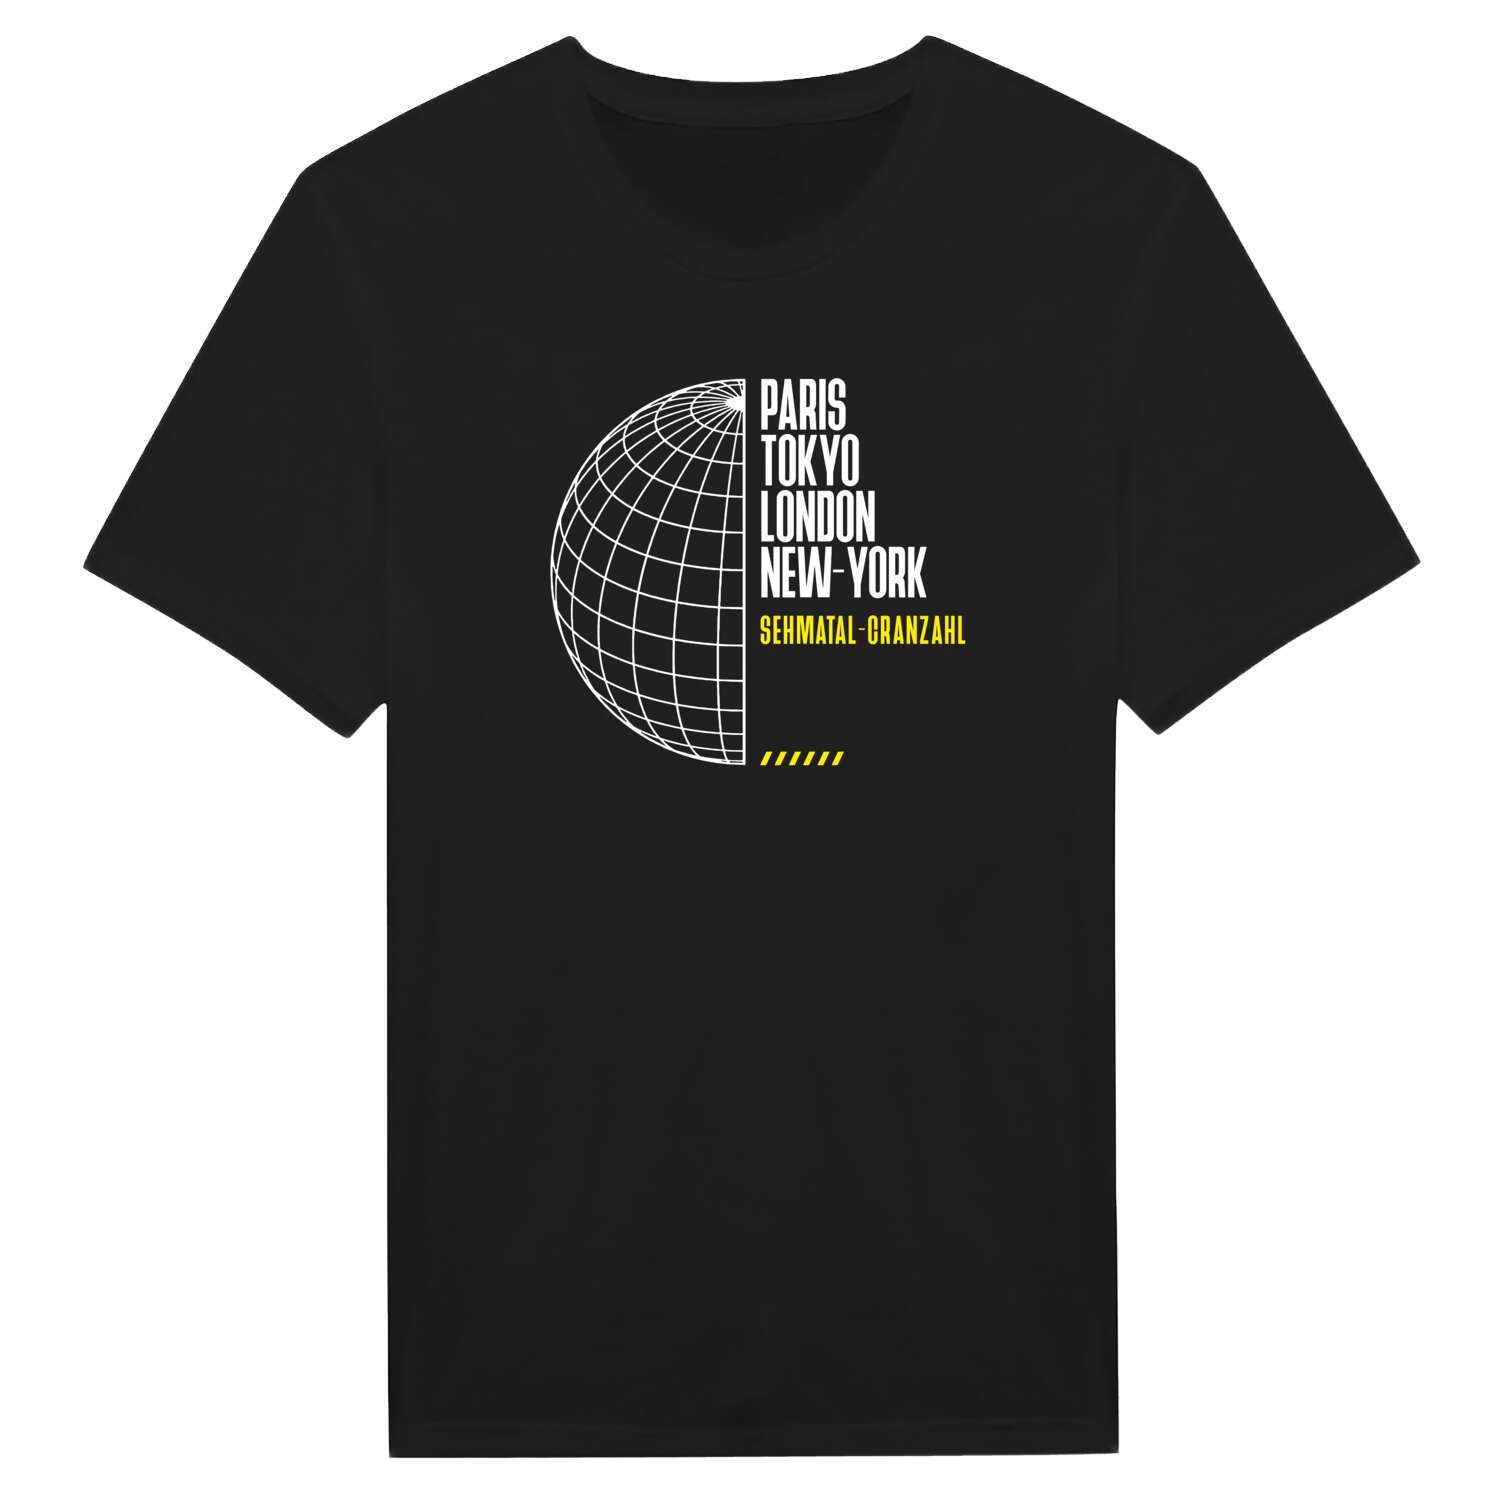 Sehmatal-Cranzahl T-Shirt »Paris Tokyo London«